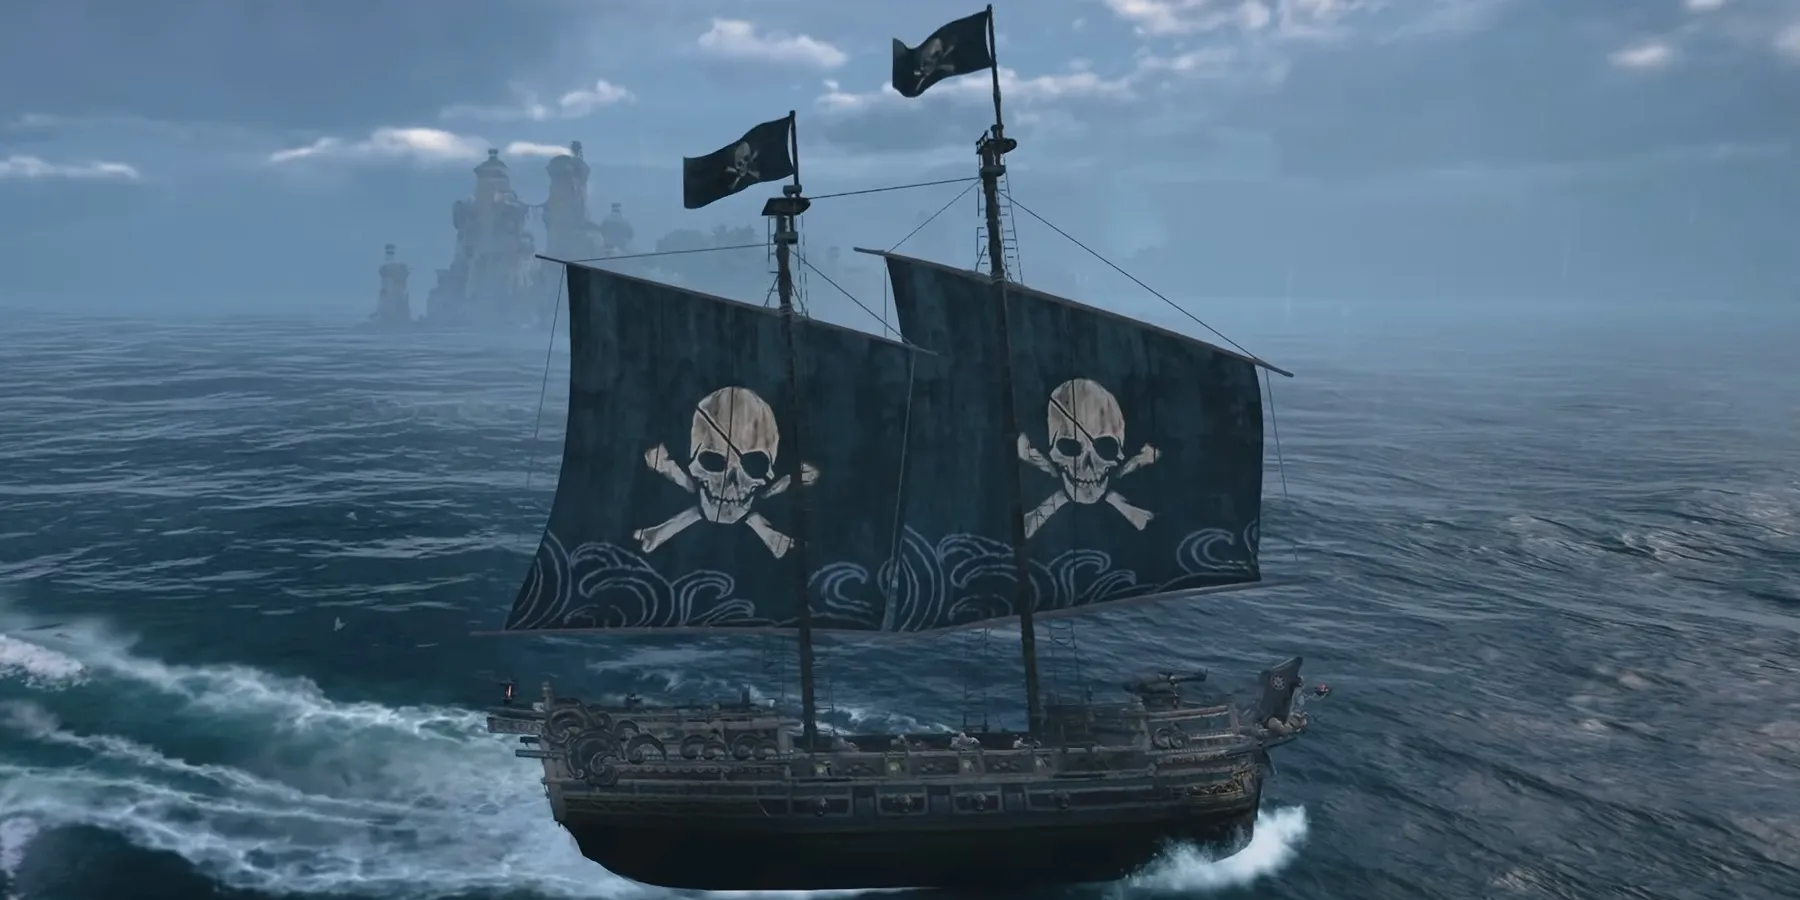 skull and bones sailing pyromaniac ship